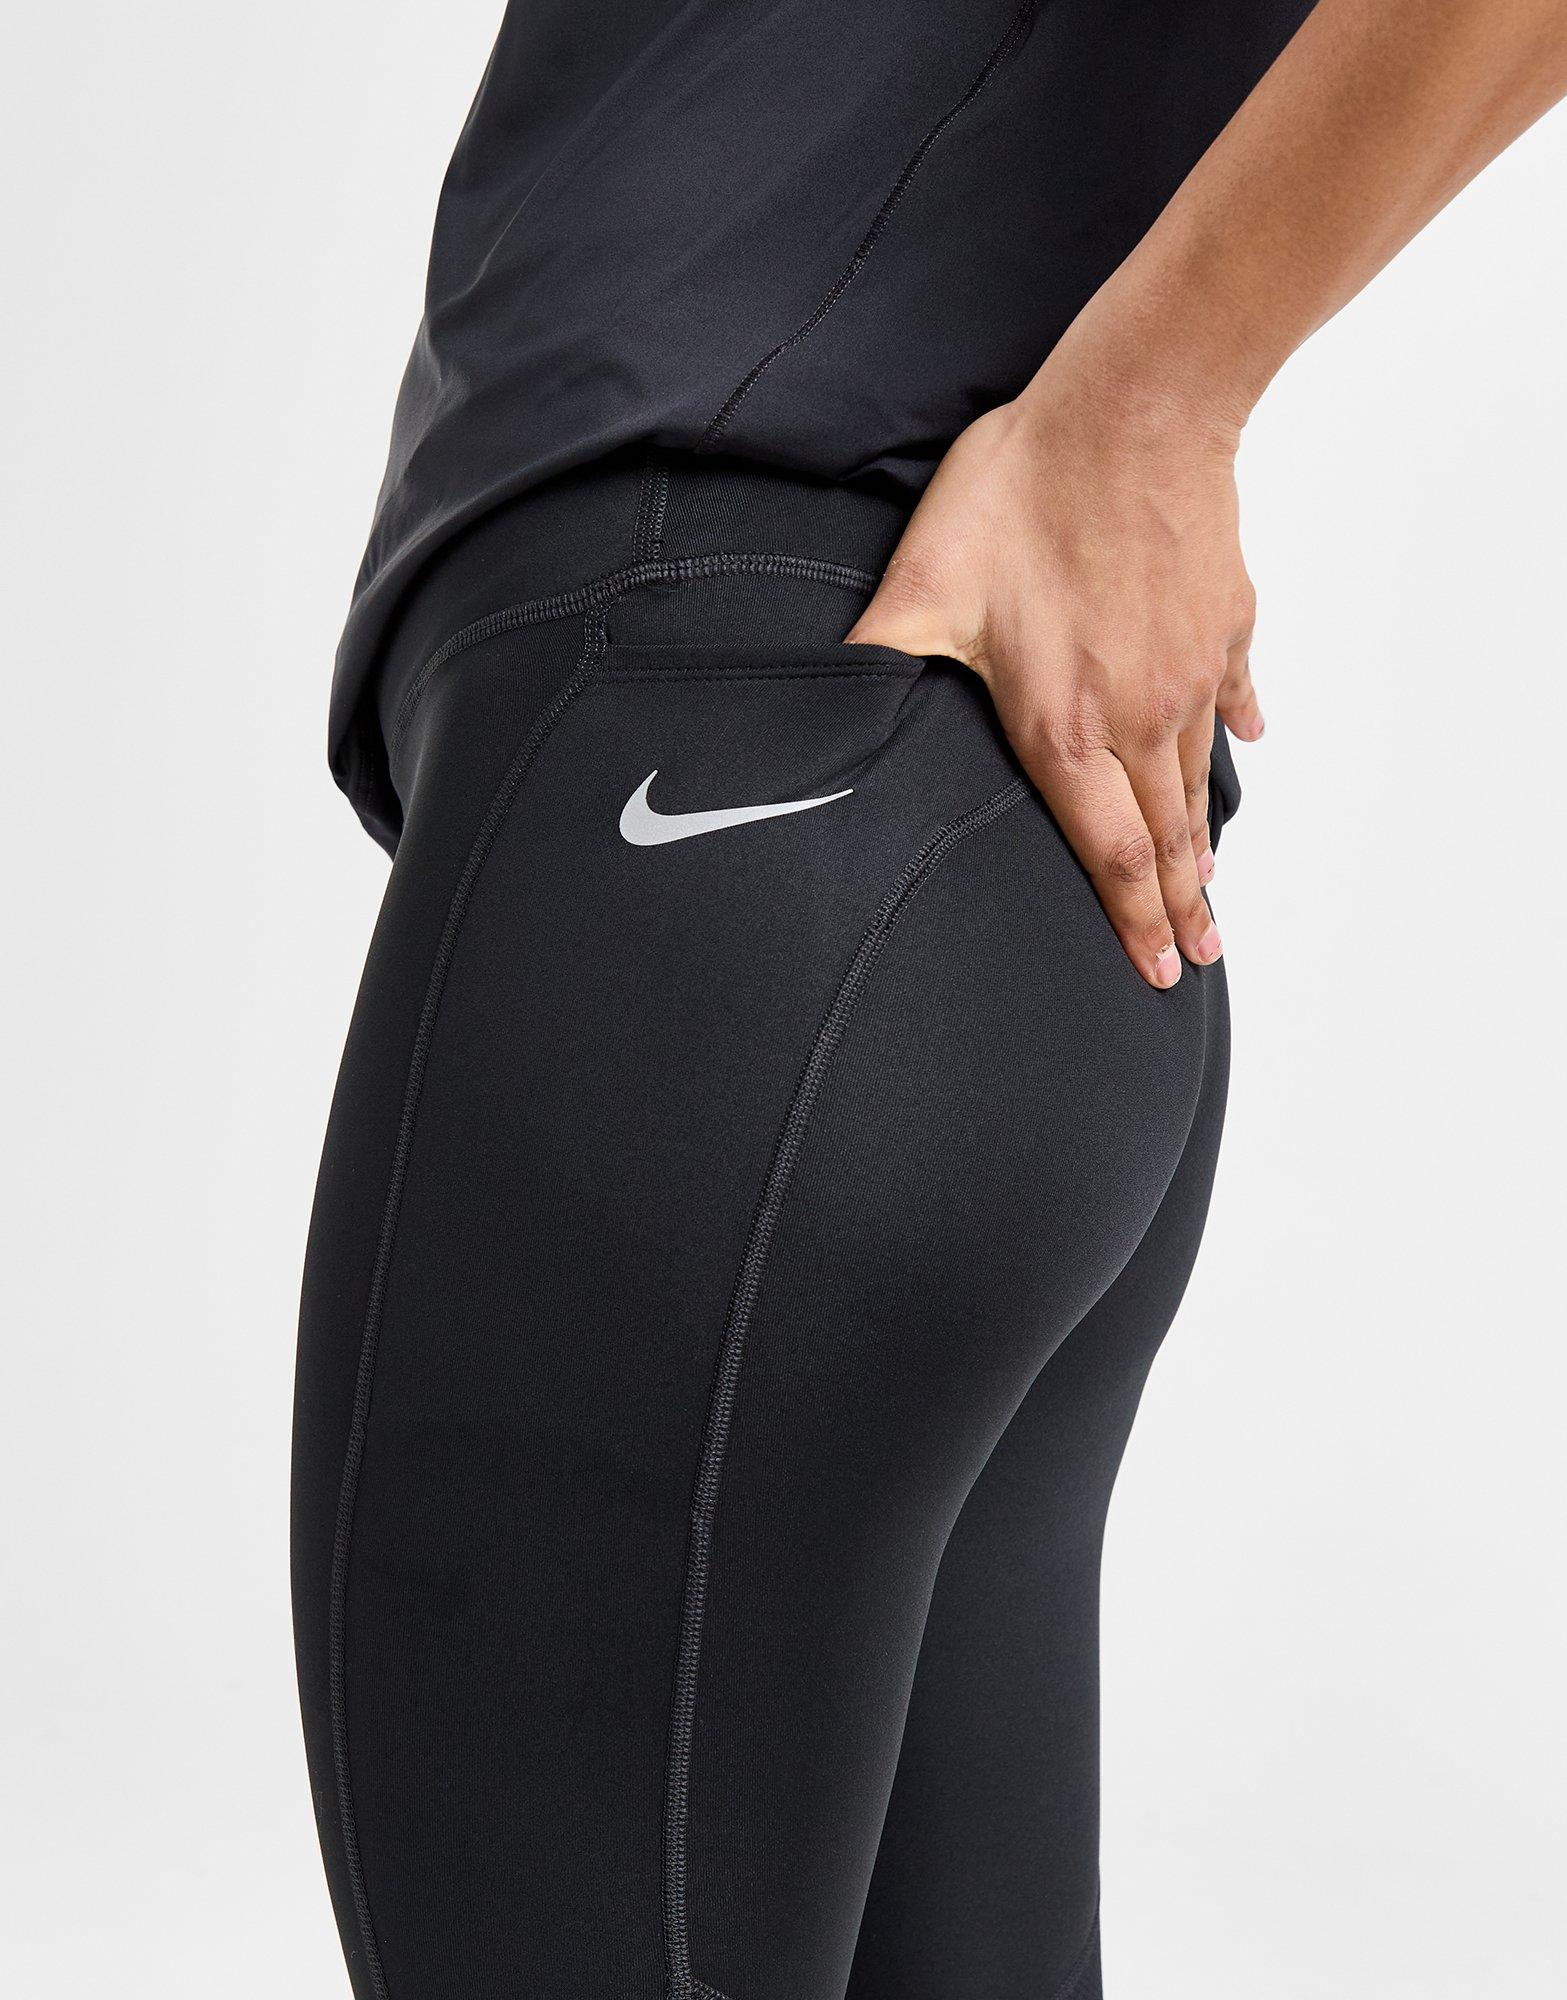 Nike Running Epic Fast Cropped leggings in black